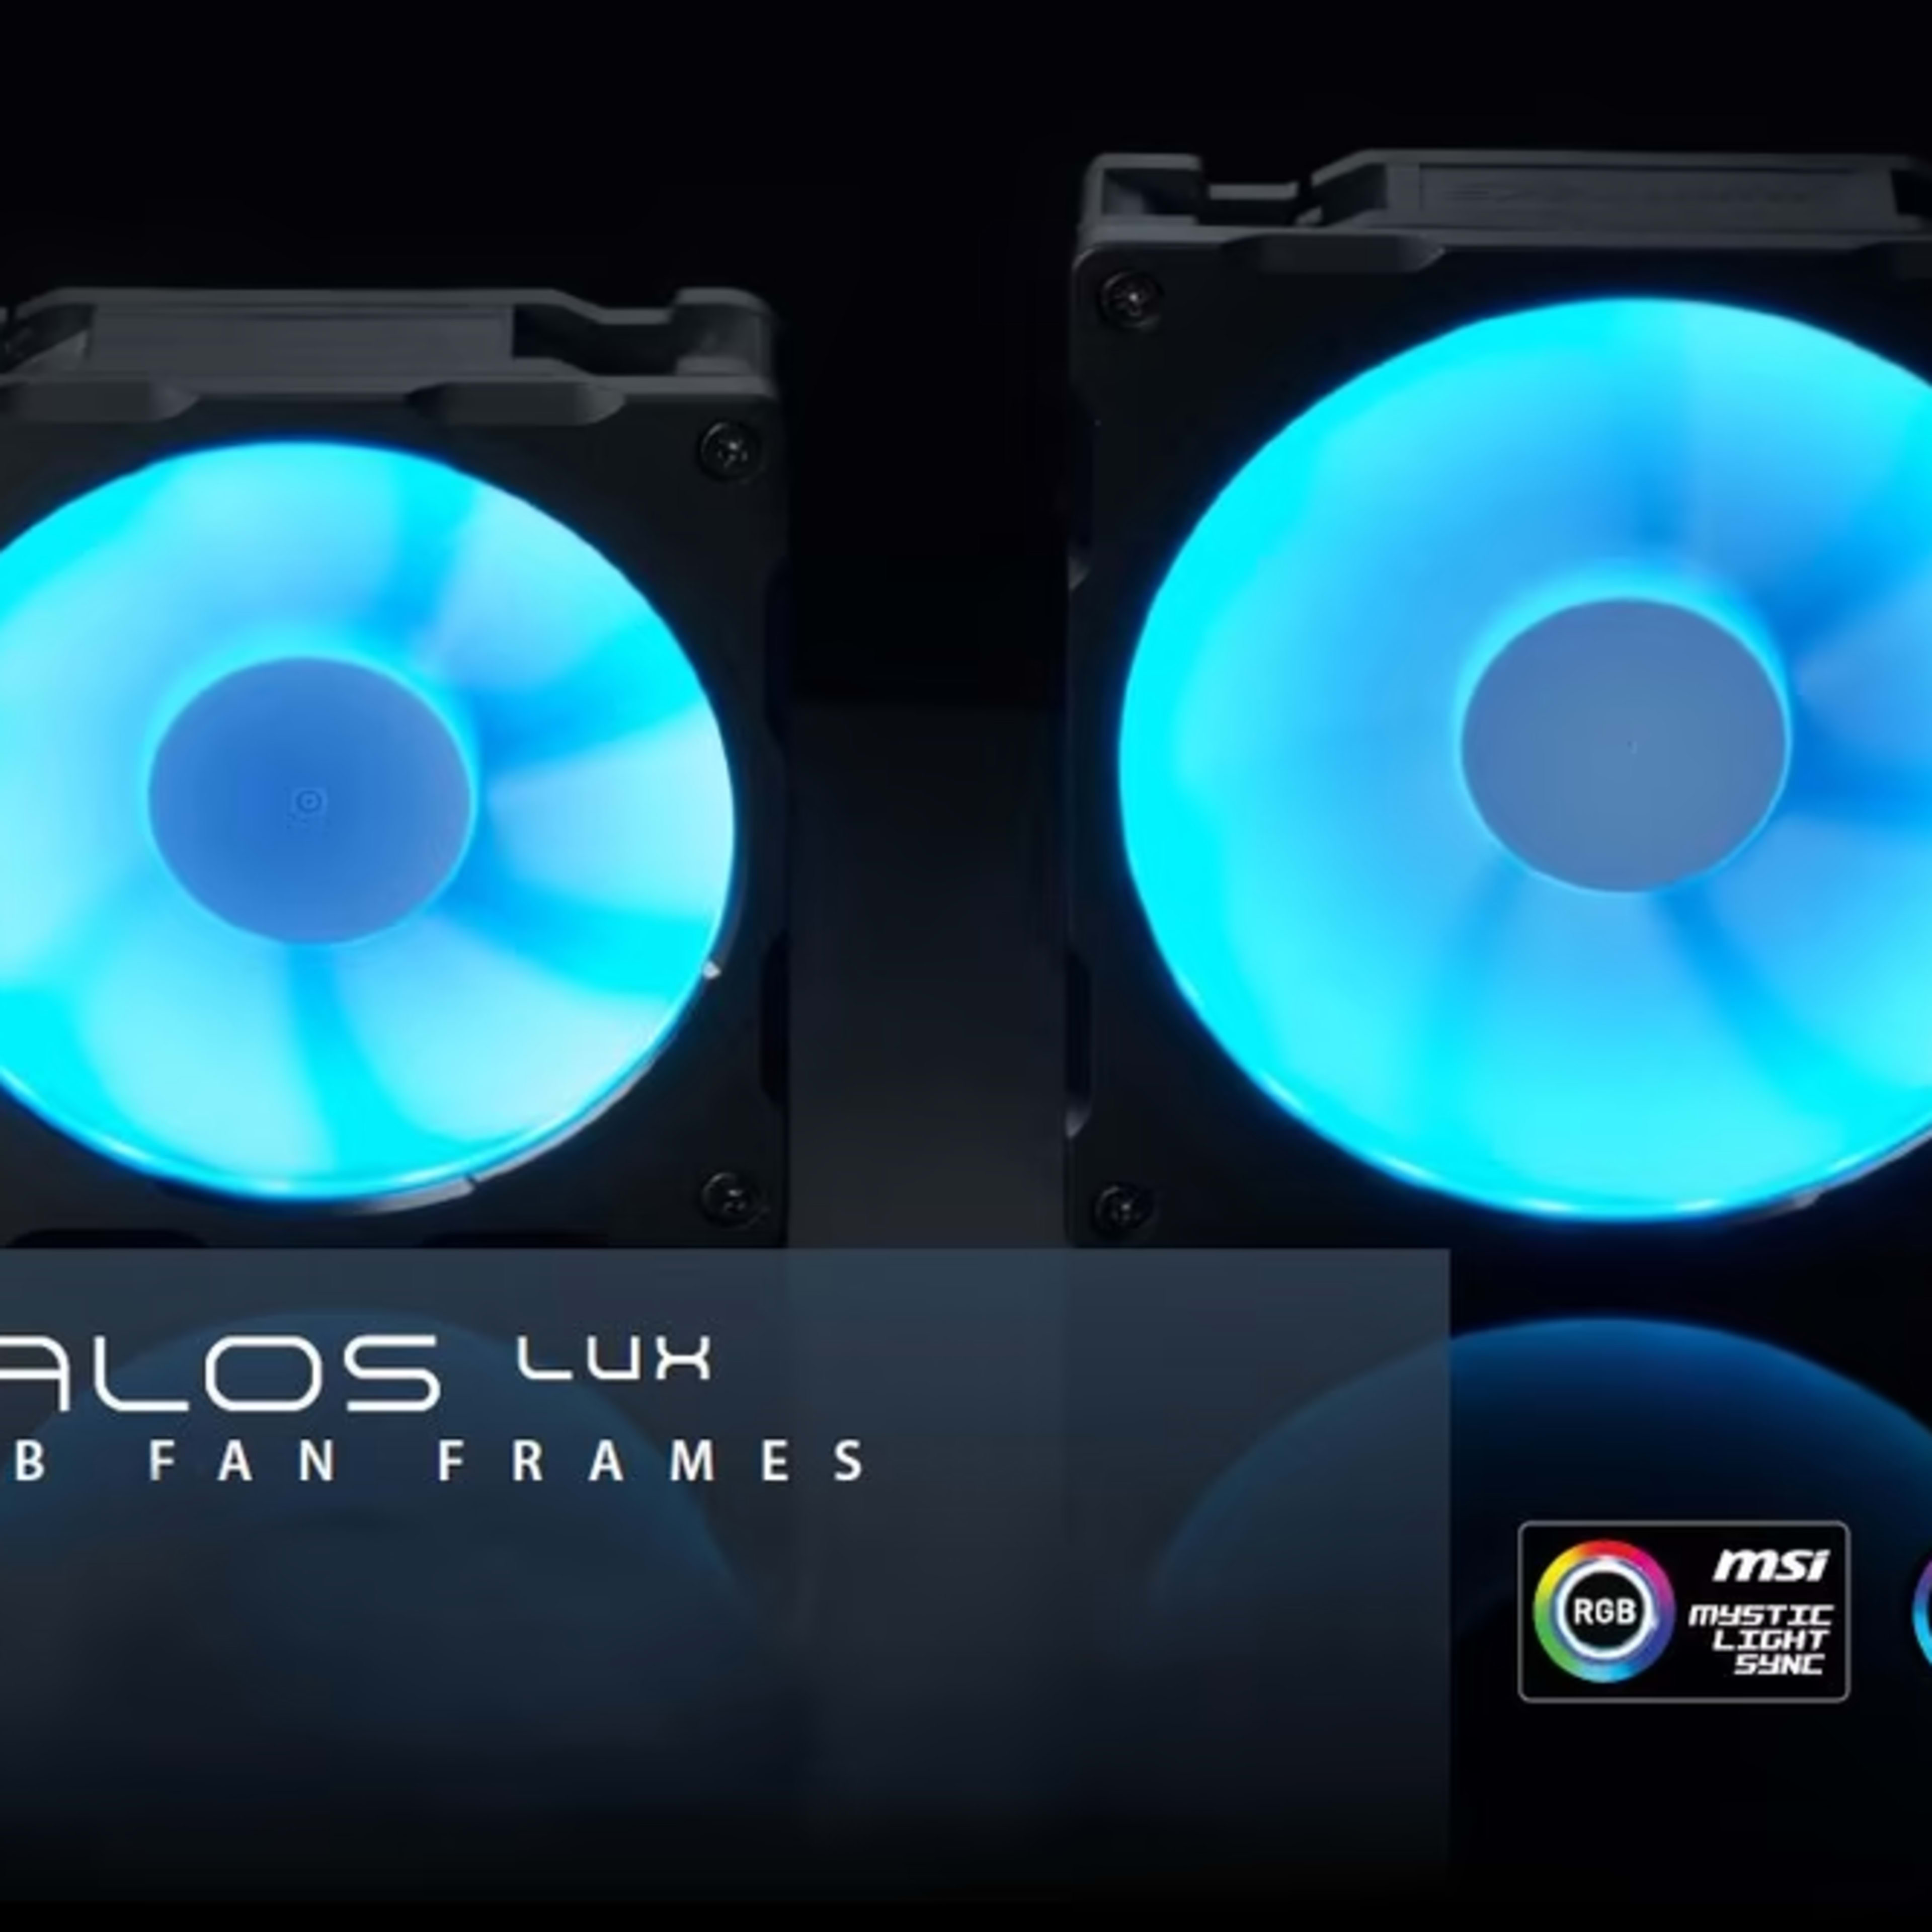 Phanteks Halos Lux Digital LED 120mm Fan Frame Alum, Black (Used, Like New)